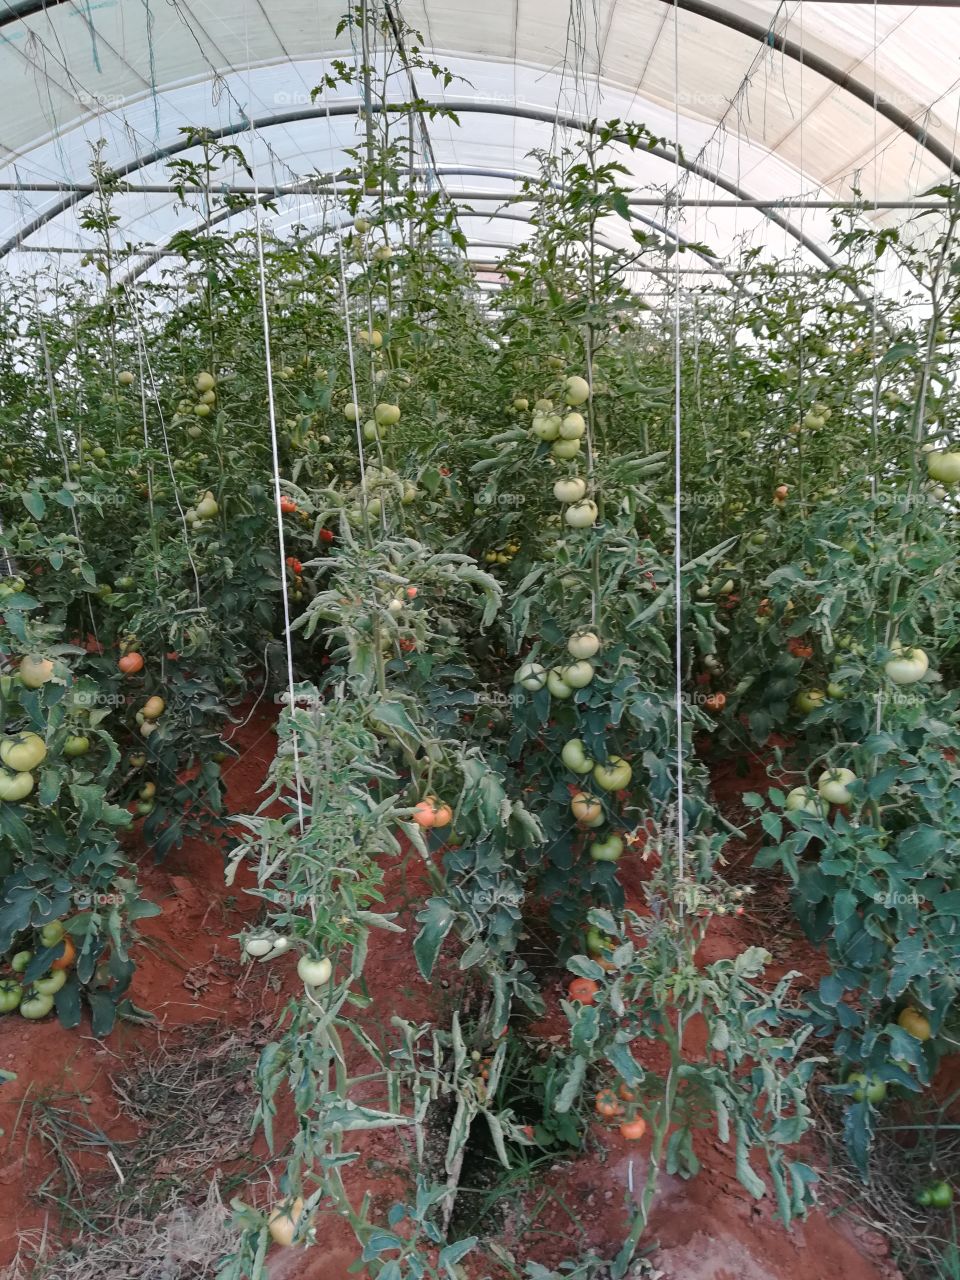 Tomatoes farm